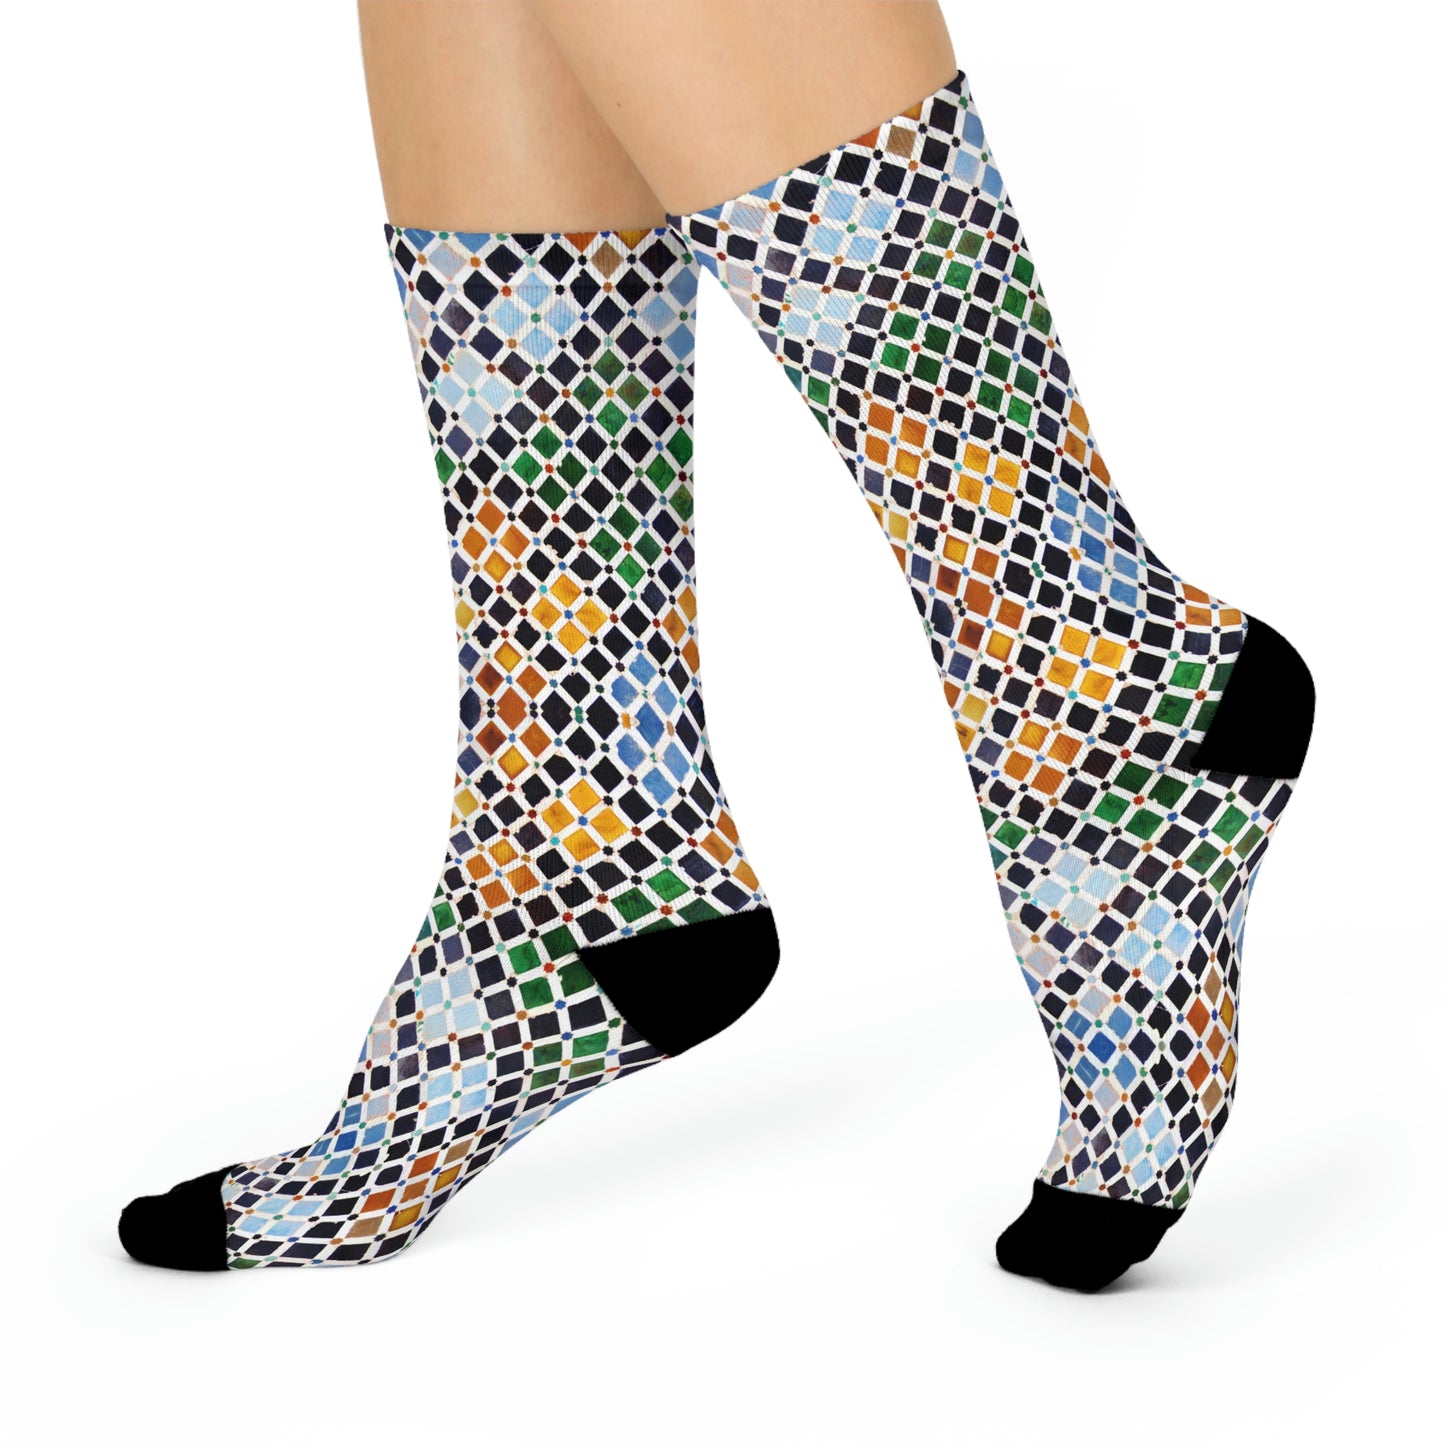 Tile Socks European Unisex Adult Stretchy Mid Calf Original